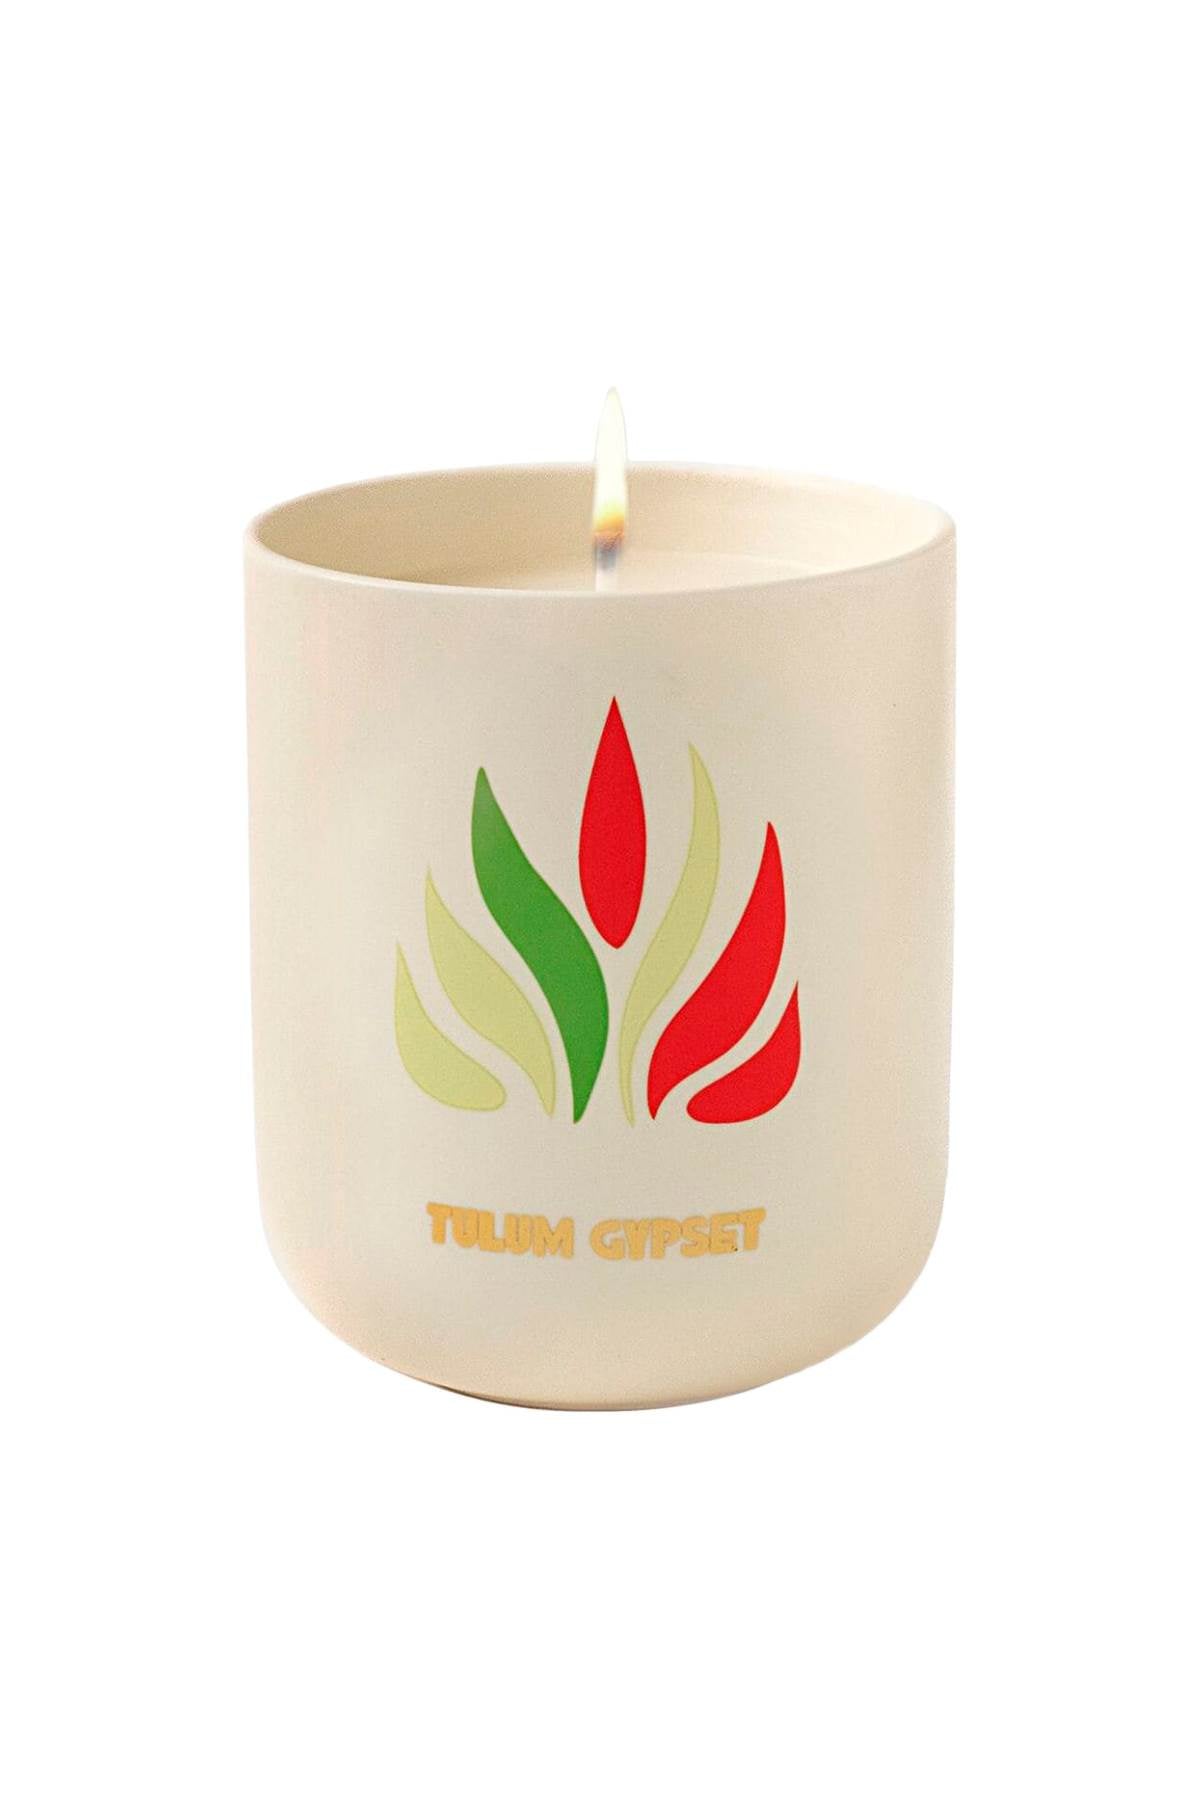 Assouline tulum gypset scented candle-0